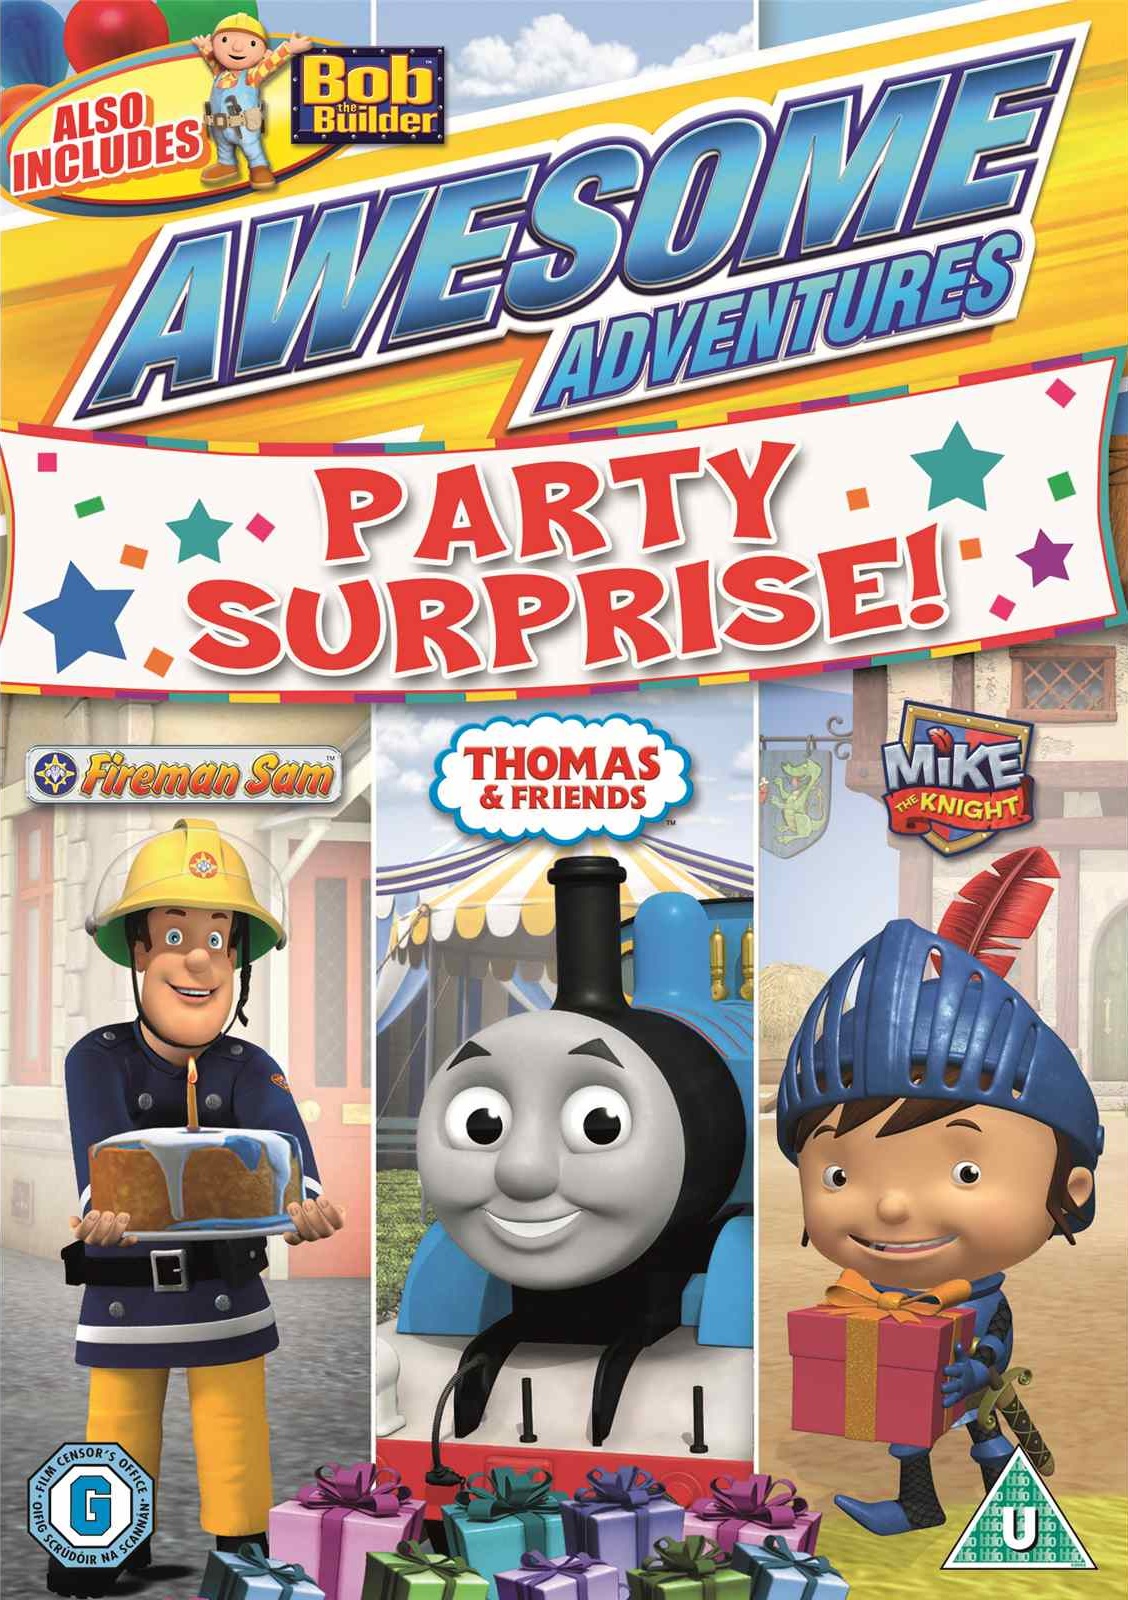 Thomas & Friends: Halloween Adventures For Kids